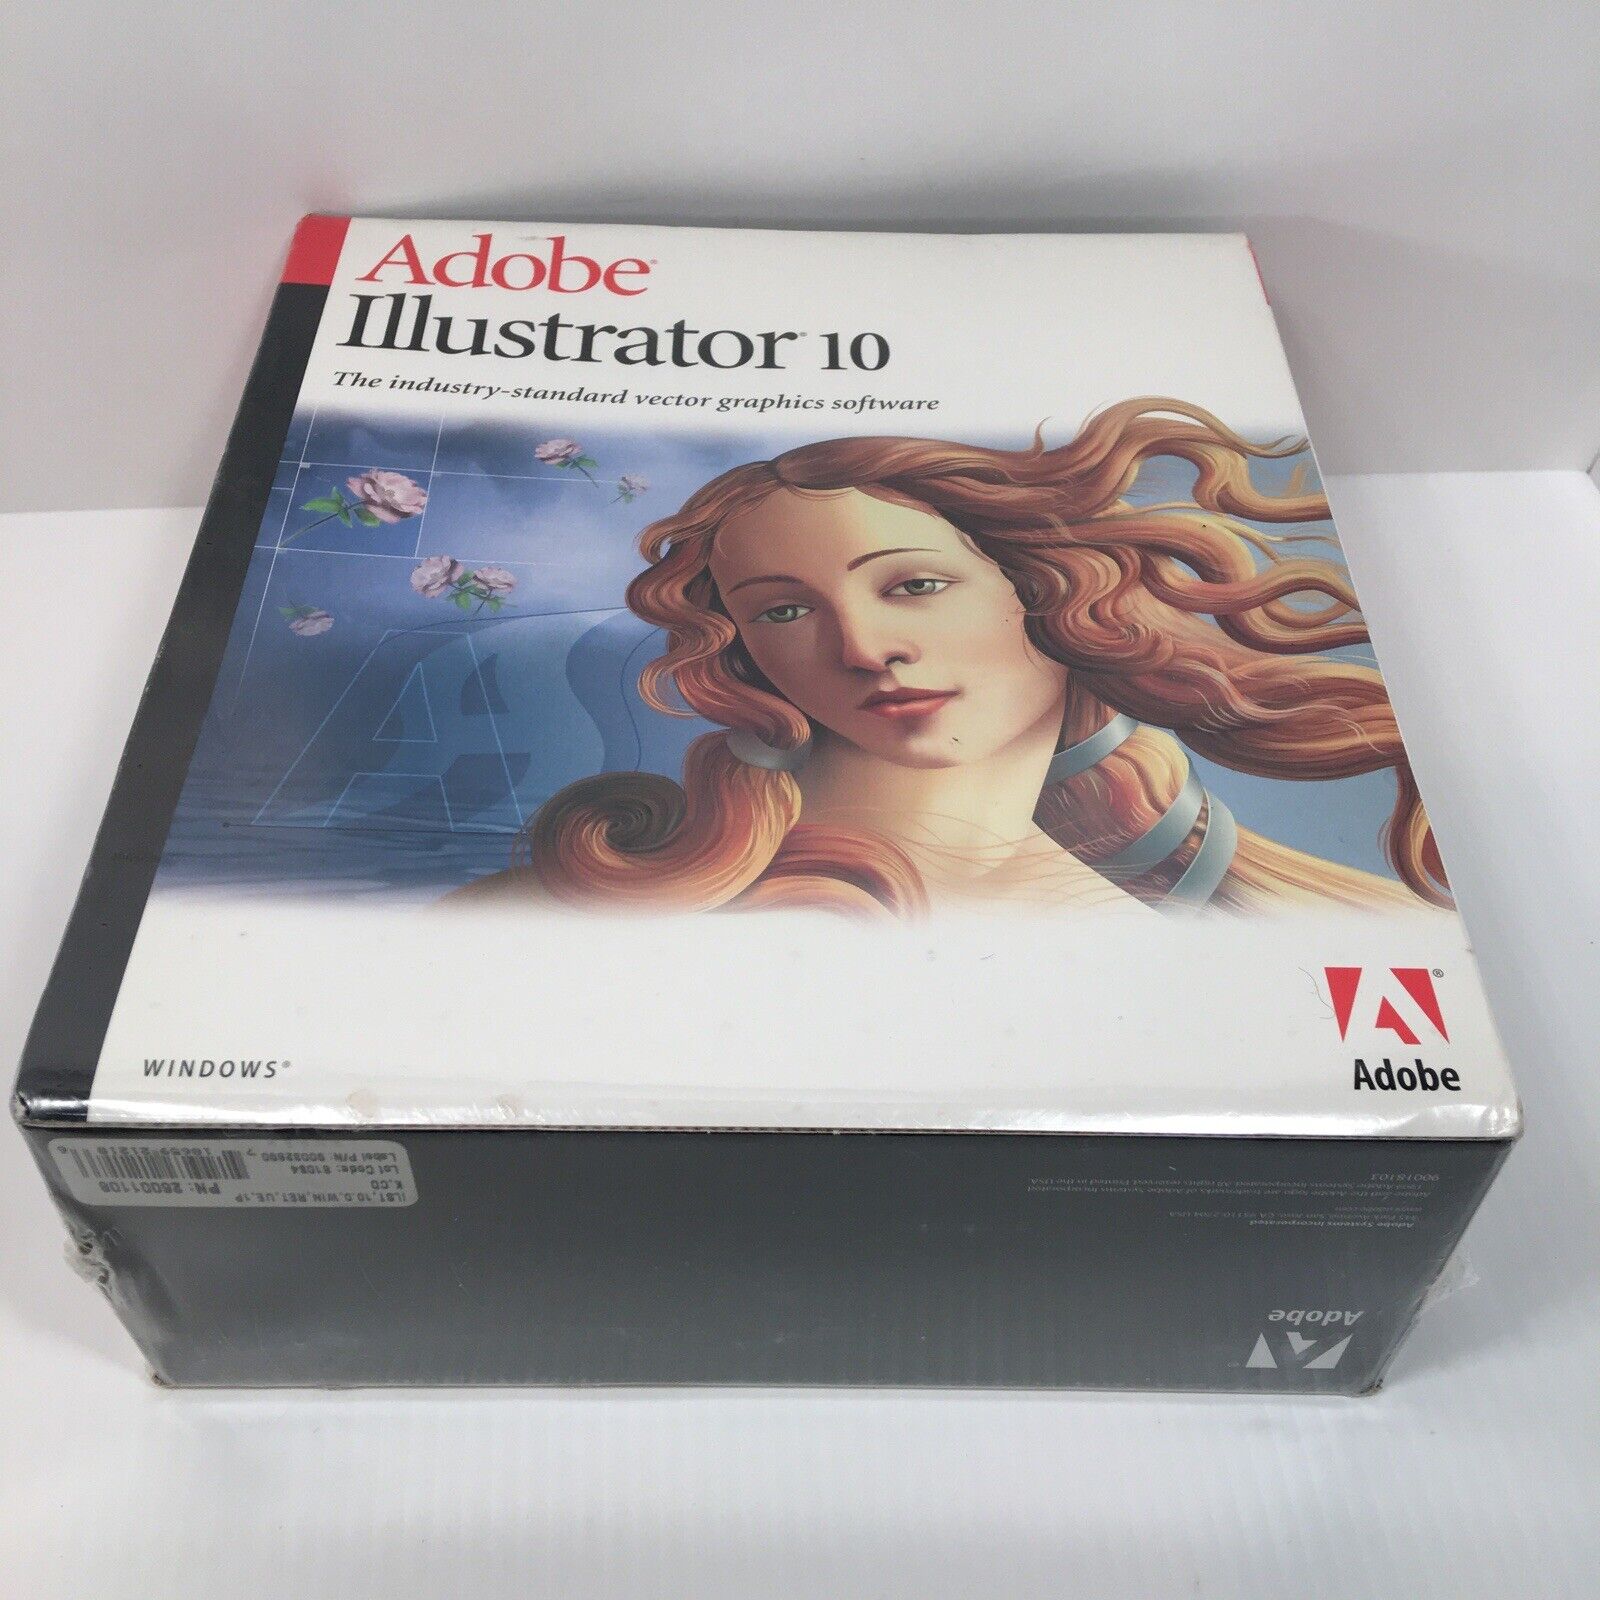 Adobe Illustrator 10 For Windows - Rare Brand New Sealed Box!